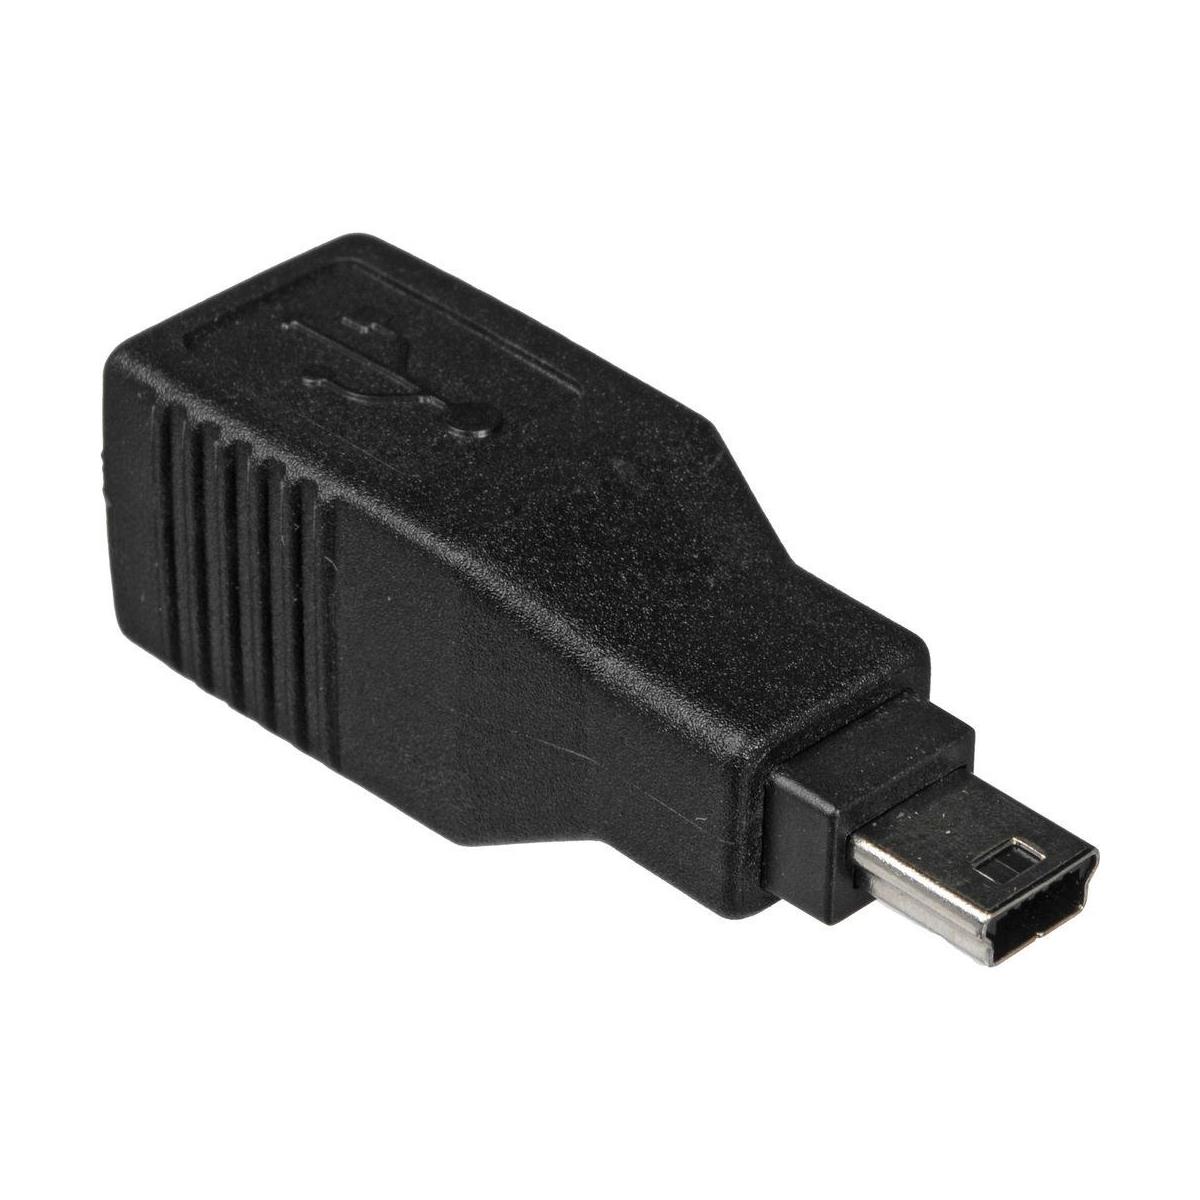 

Comprehensive USB B Female to Mini B 5Male Adapter